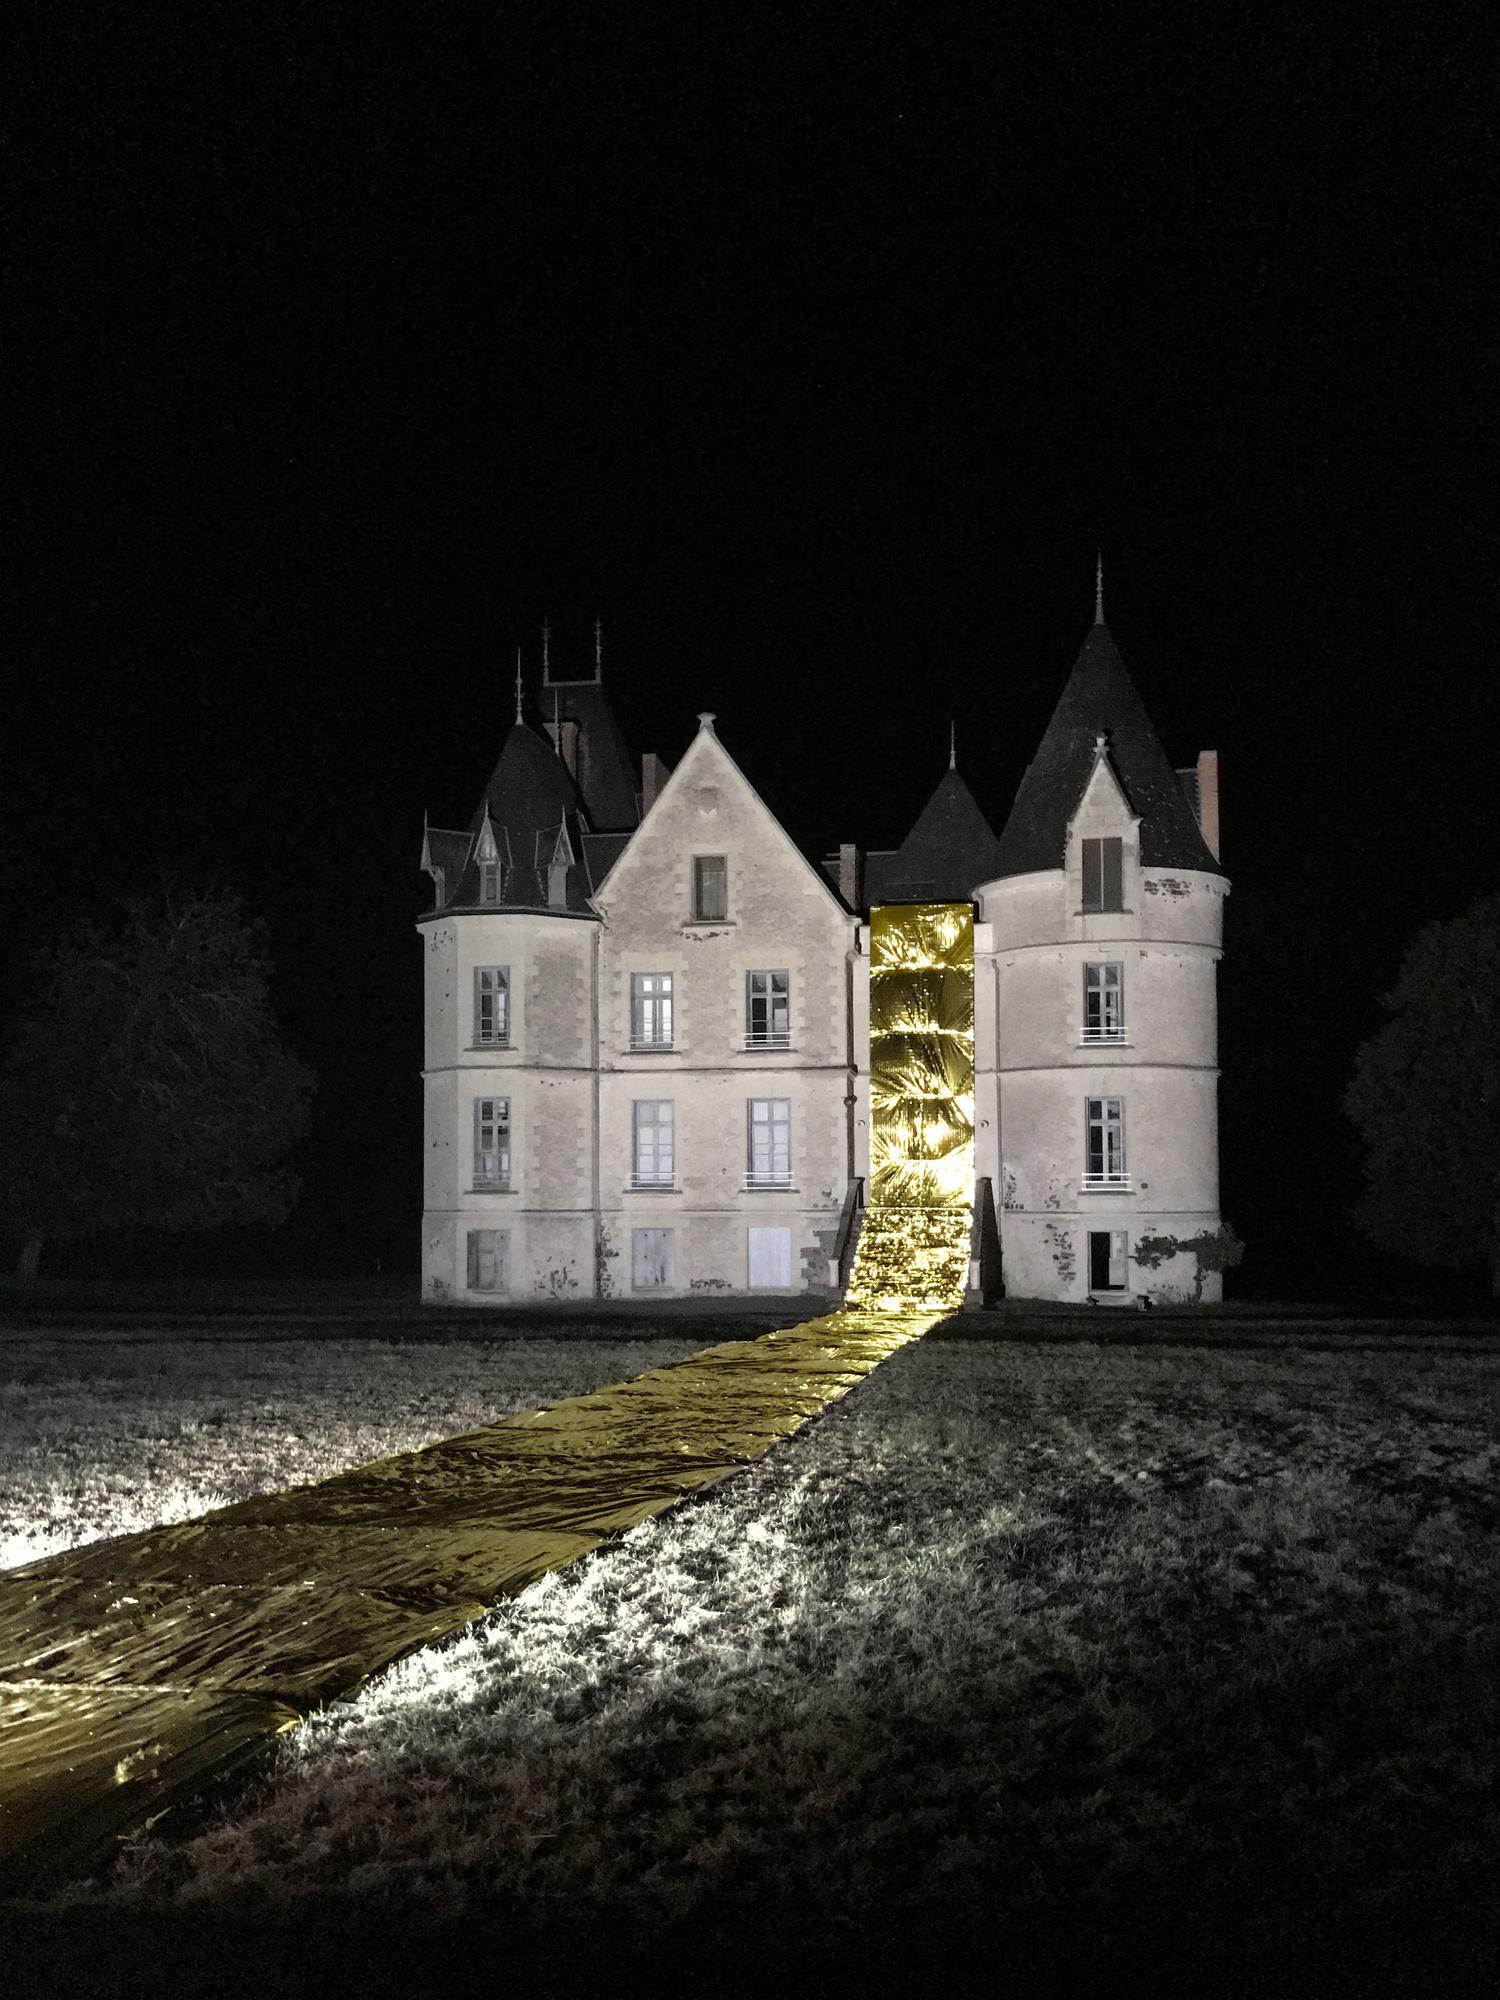 Golden Rivers – Installation in place on Domain de Boisbuchet castle by night